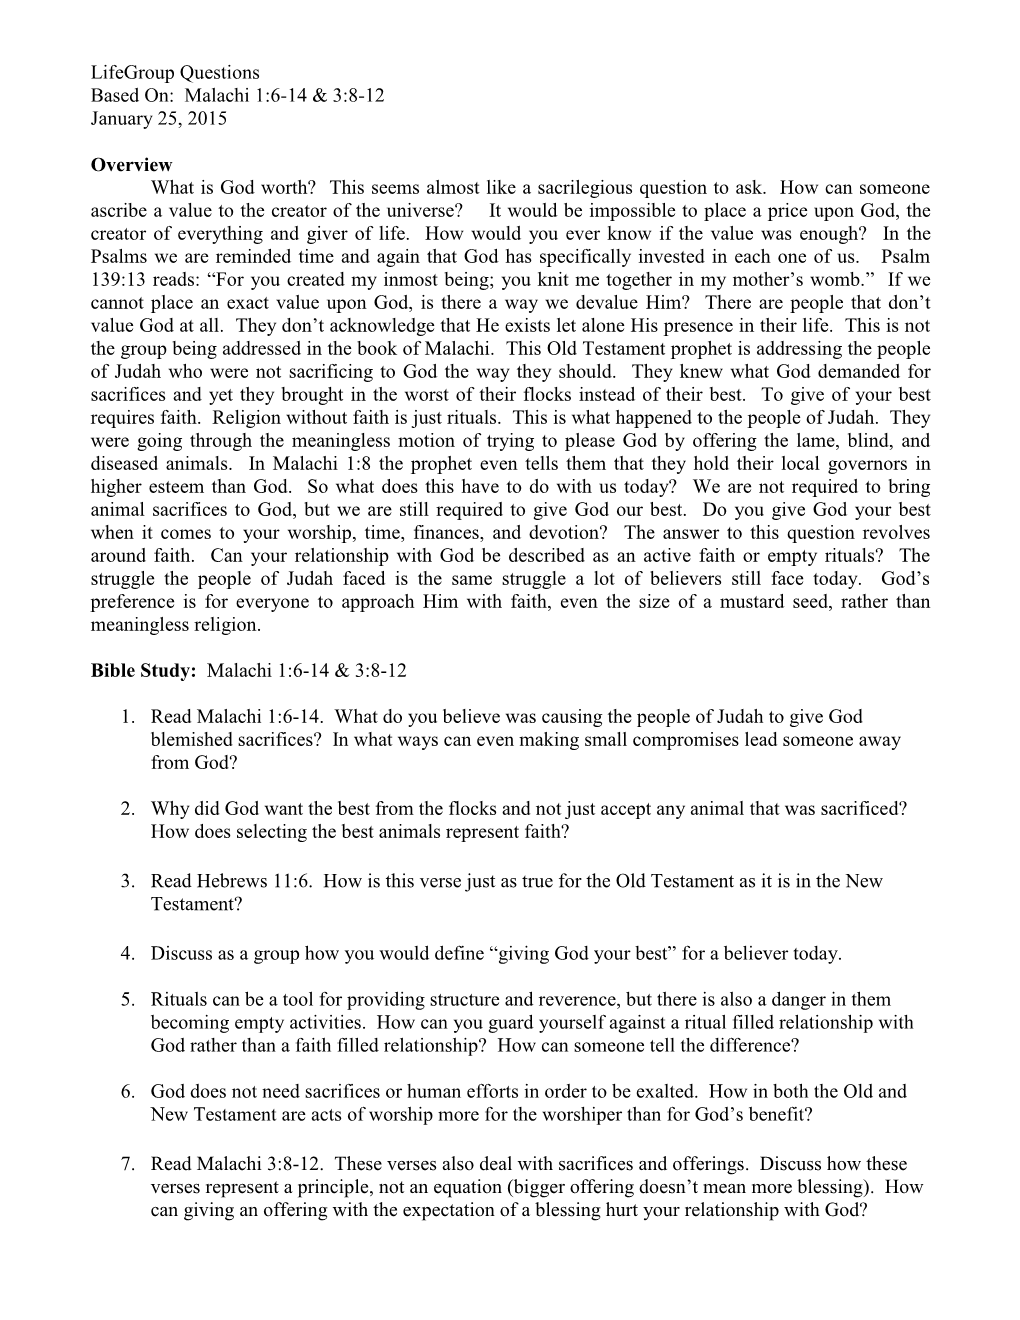 Lifegroup Questions Based On: Malachi 1:6-14 & 3:8-12 January 25, 2015